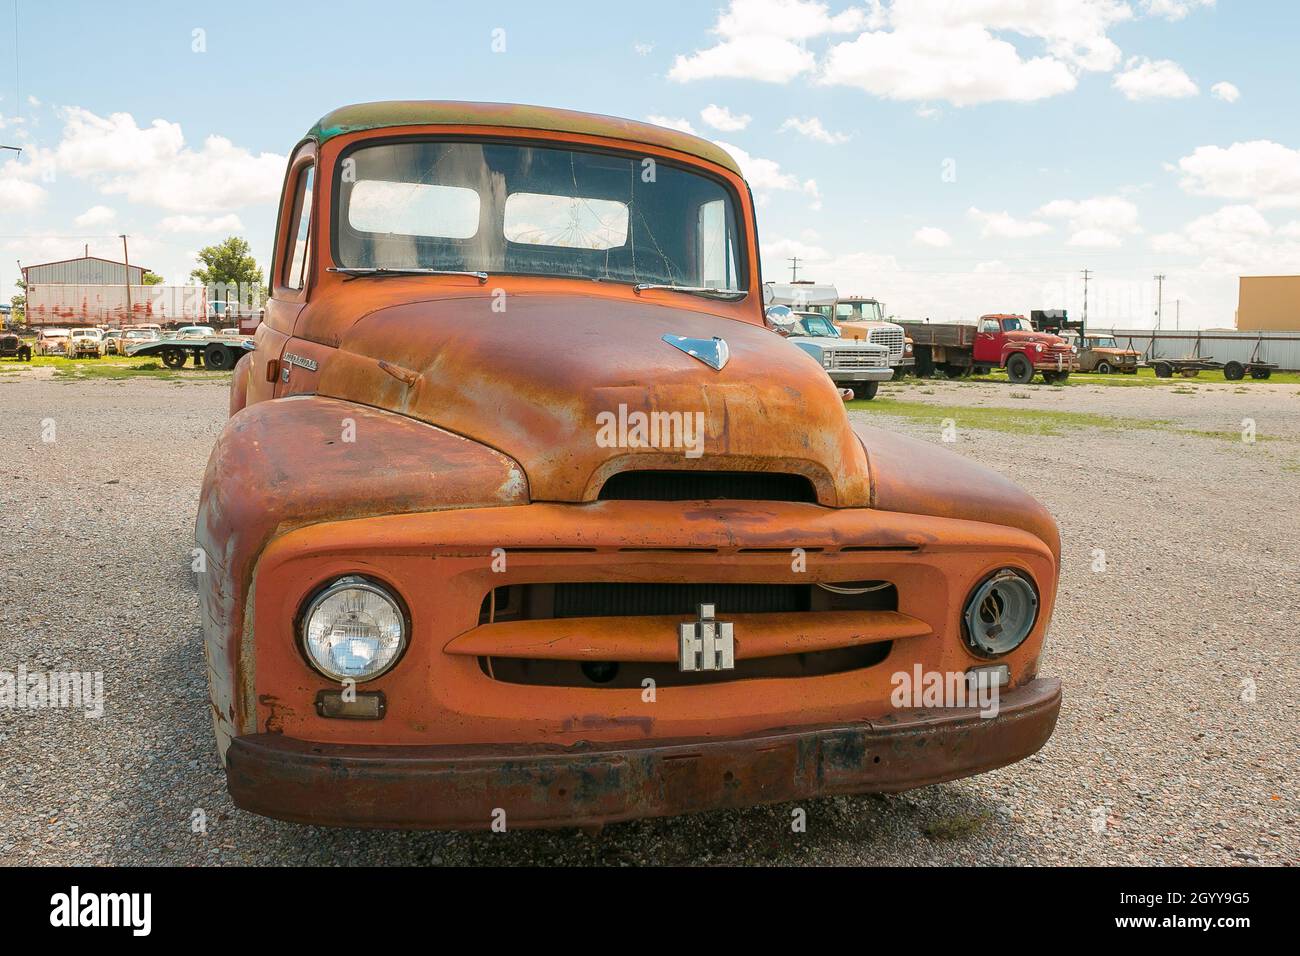 vintage American International harvester truck in junkyard Stock Photo